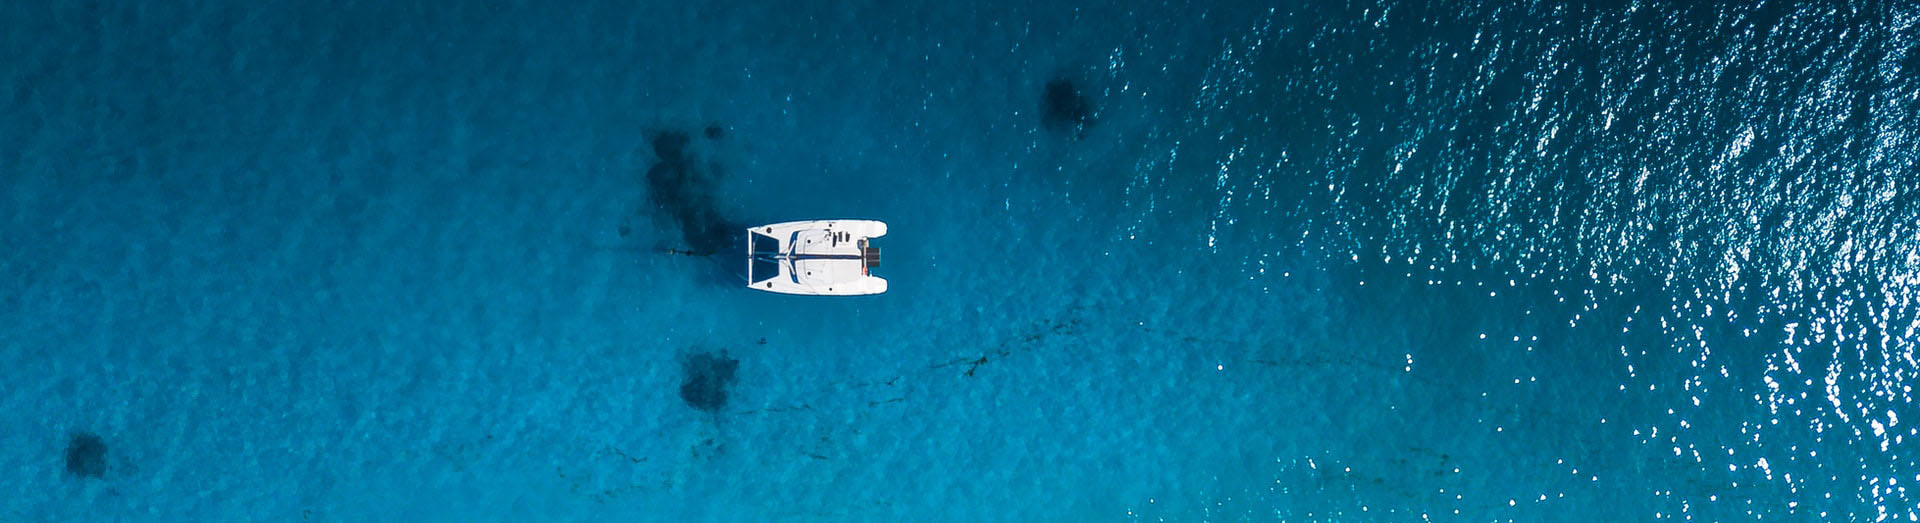 catamaran anchored in blue water